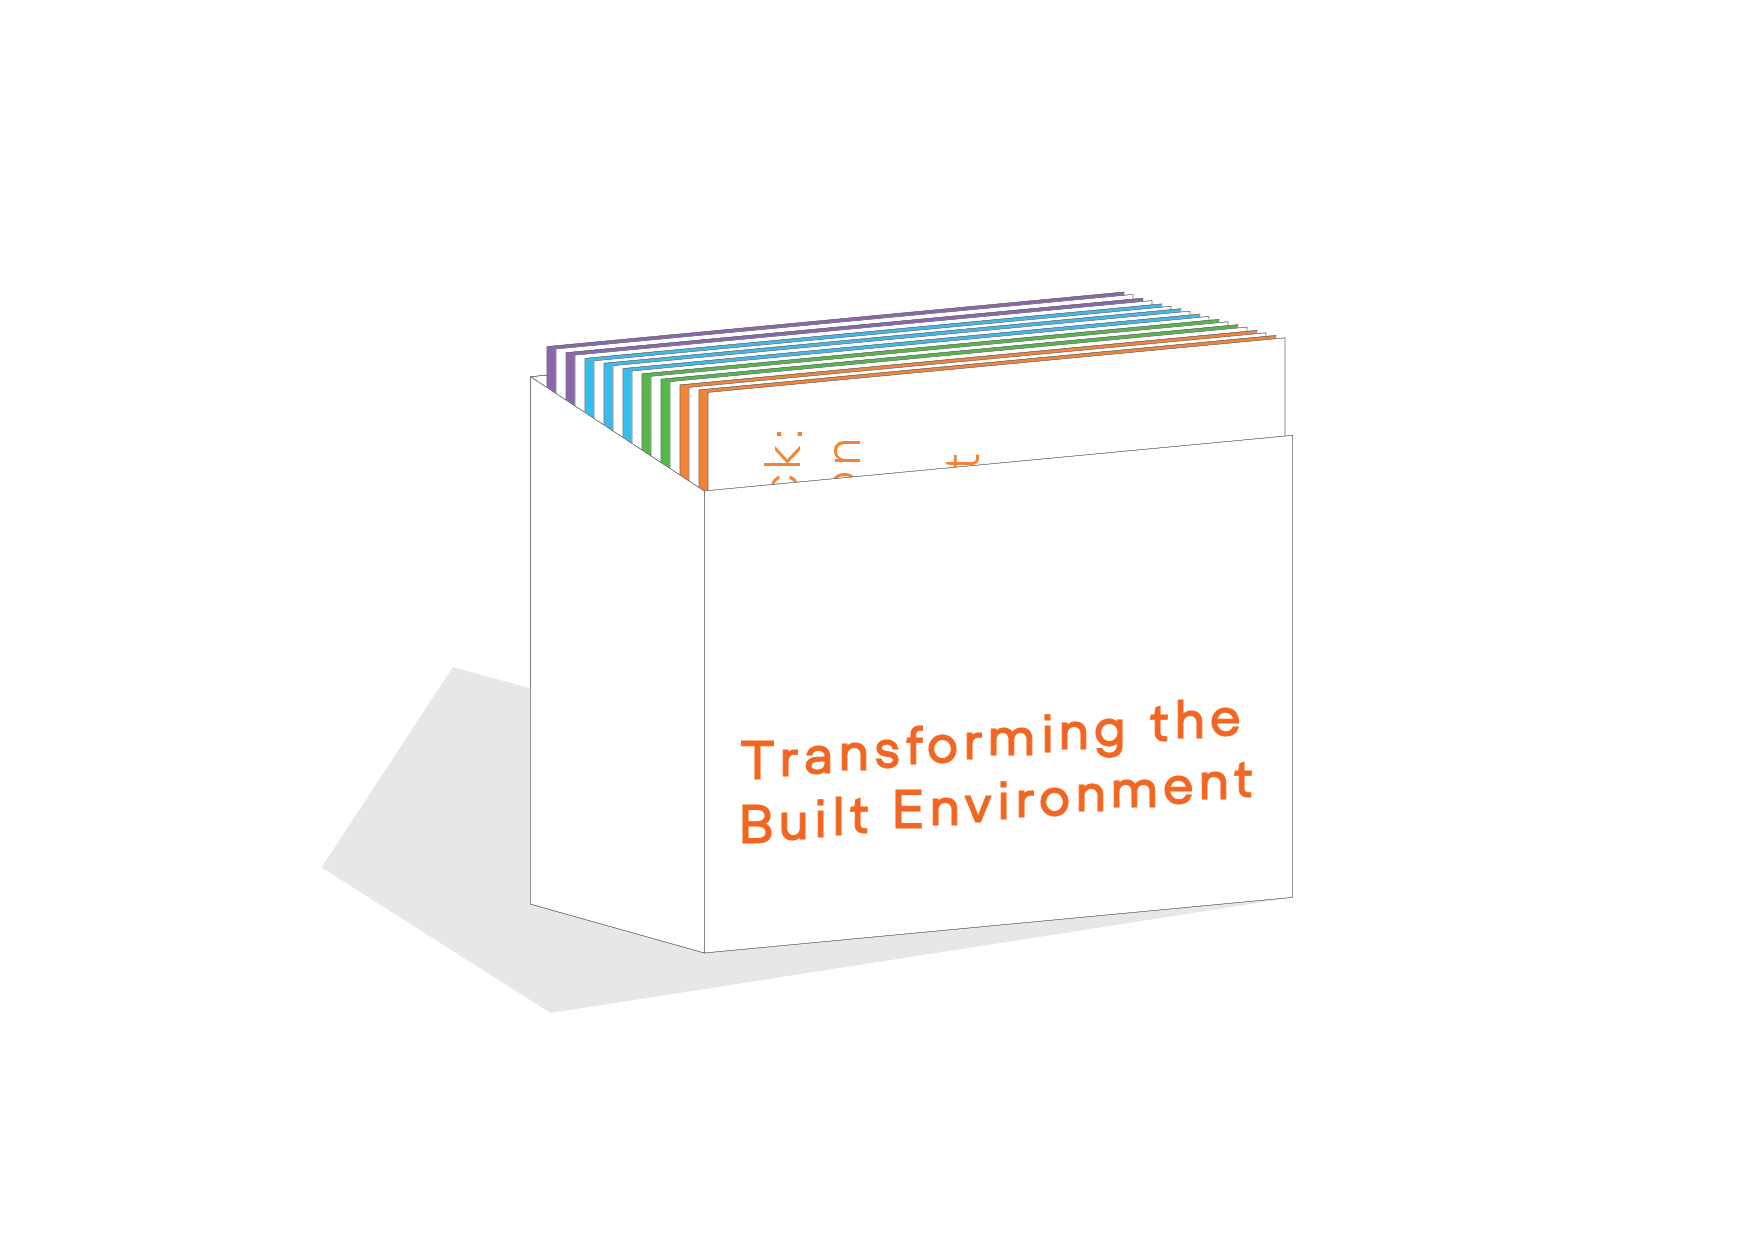 factsheet compendium: transforming the built environment